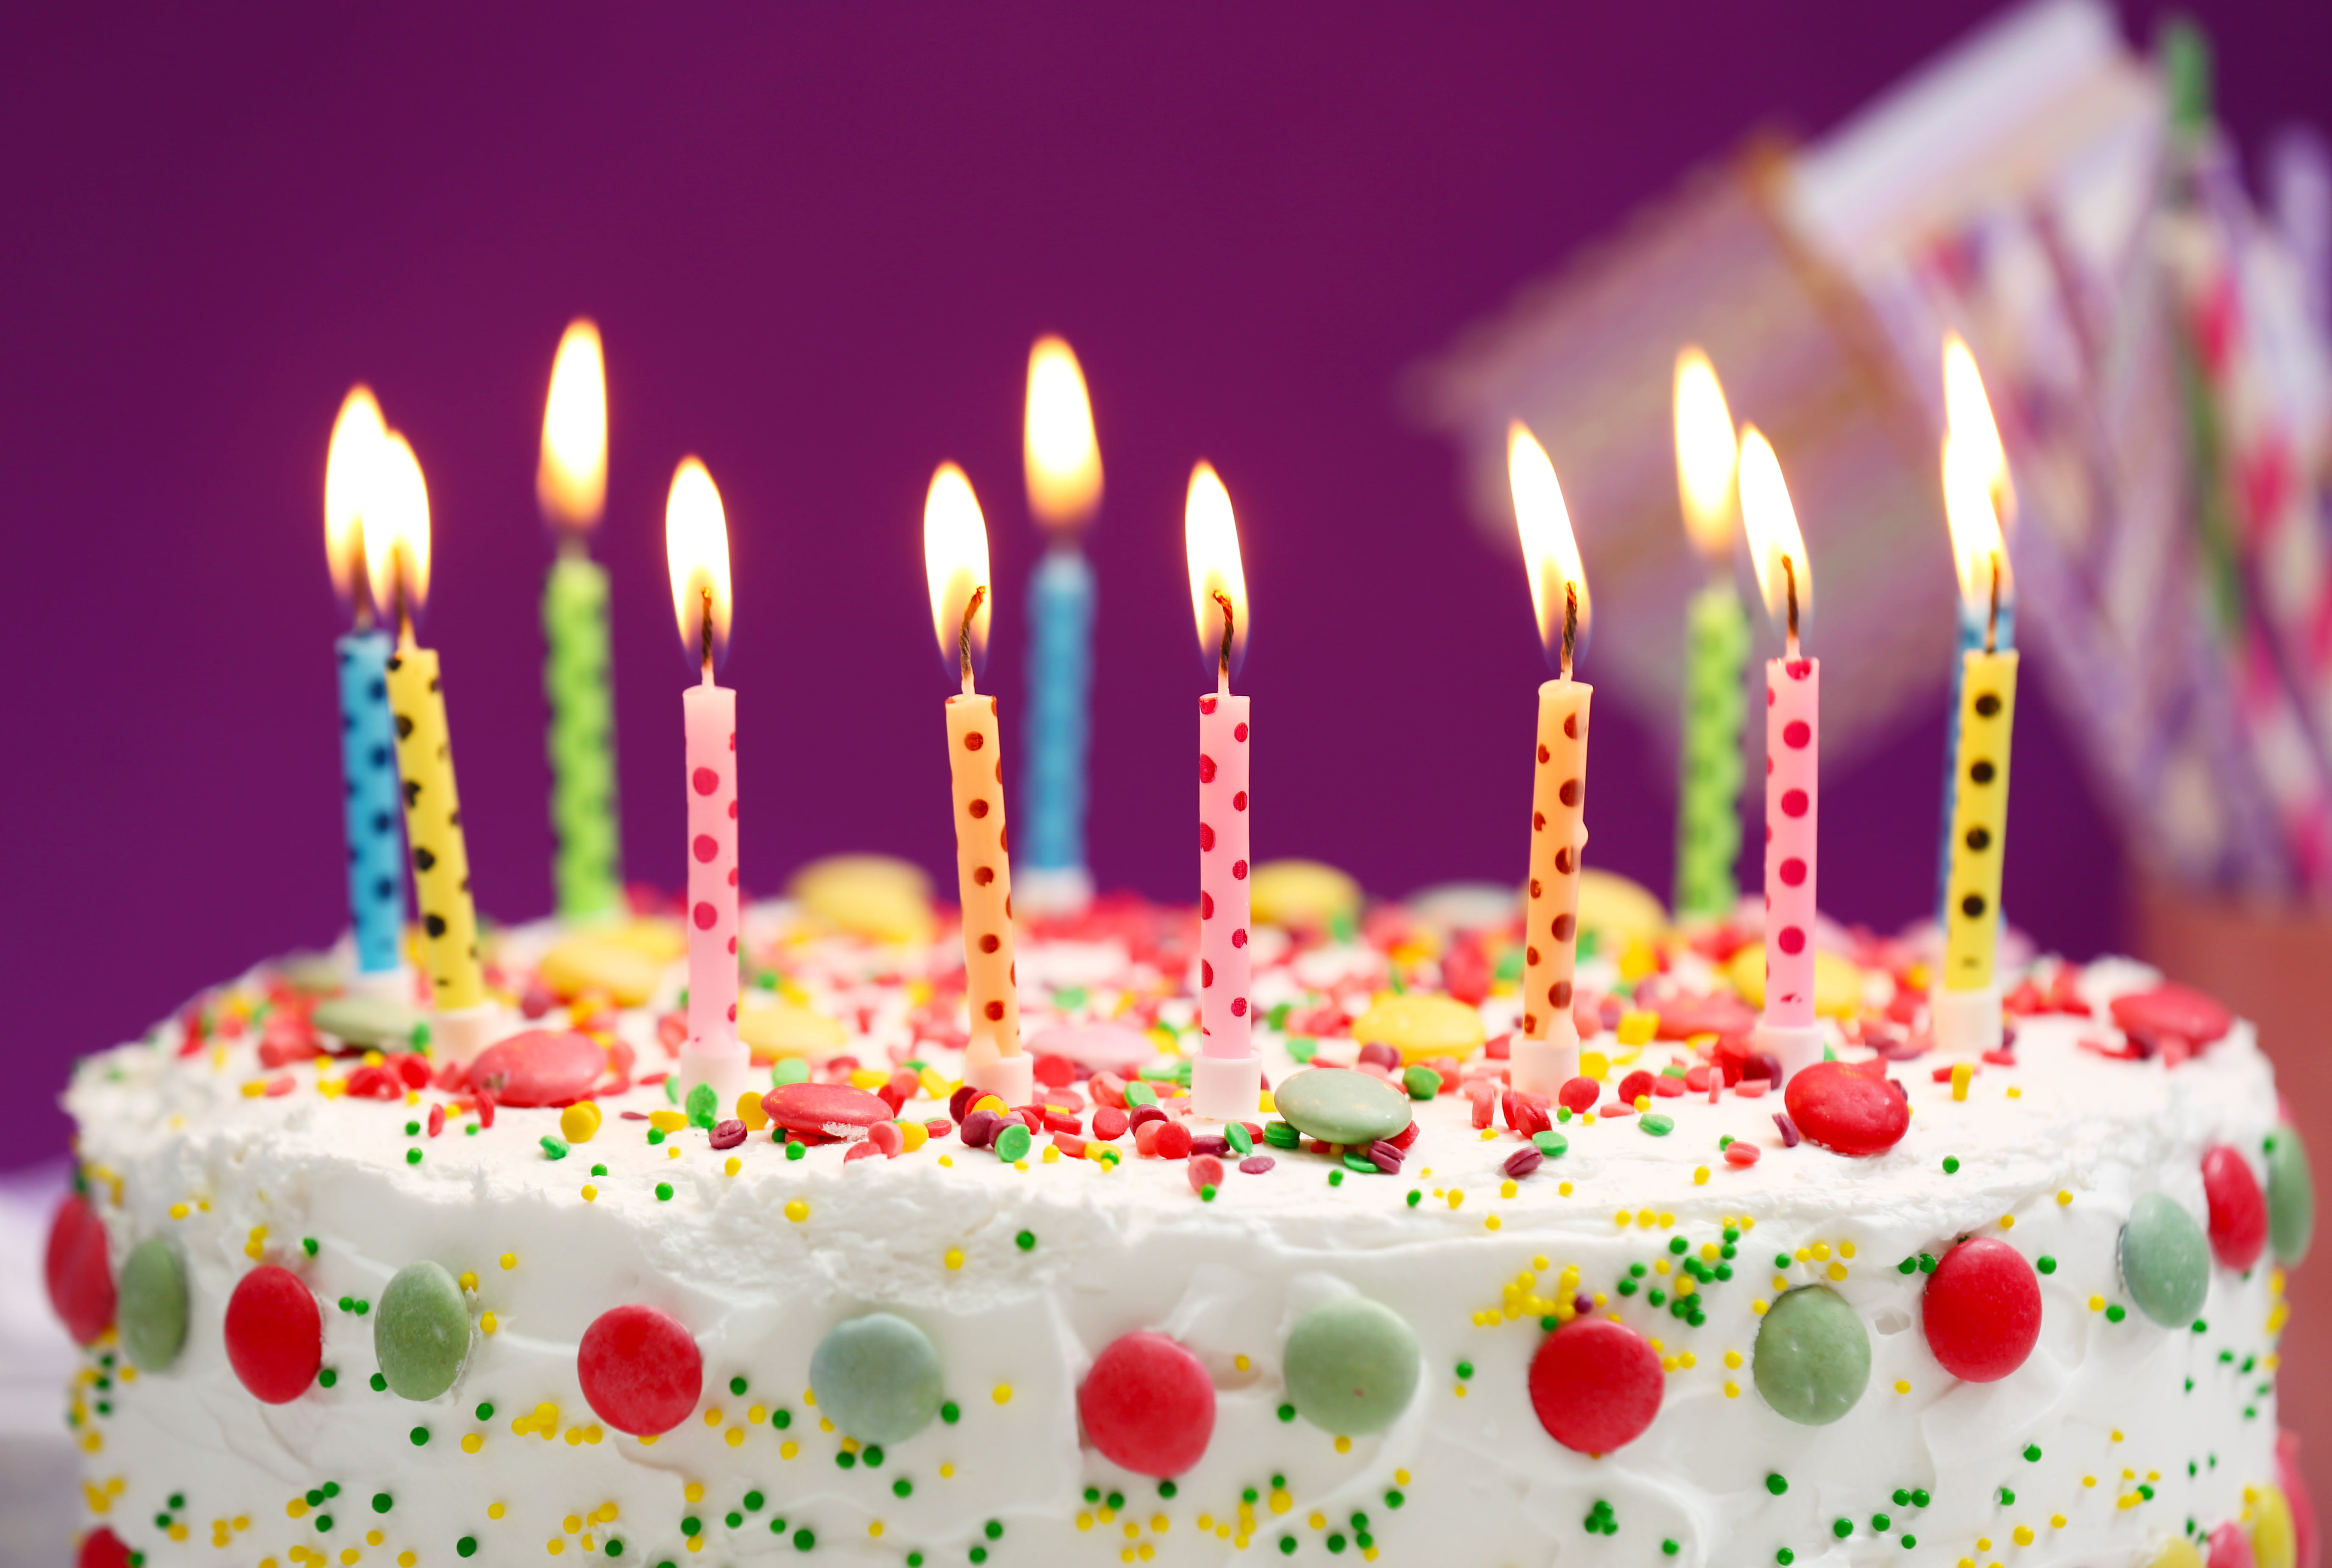 fondant cake with candles, sweet, decoration, Happy, Birthday